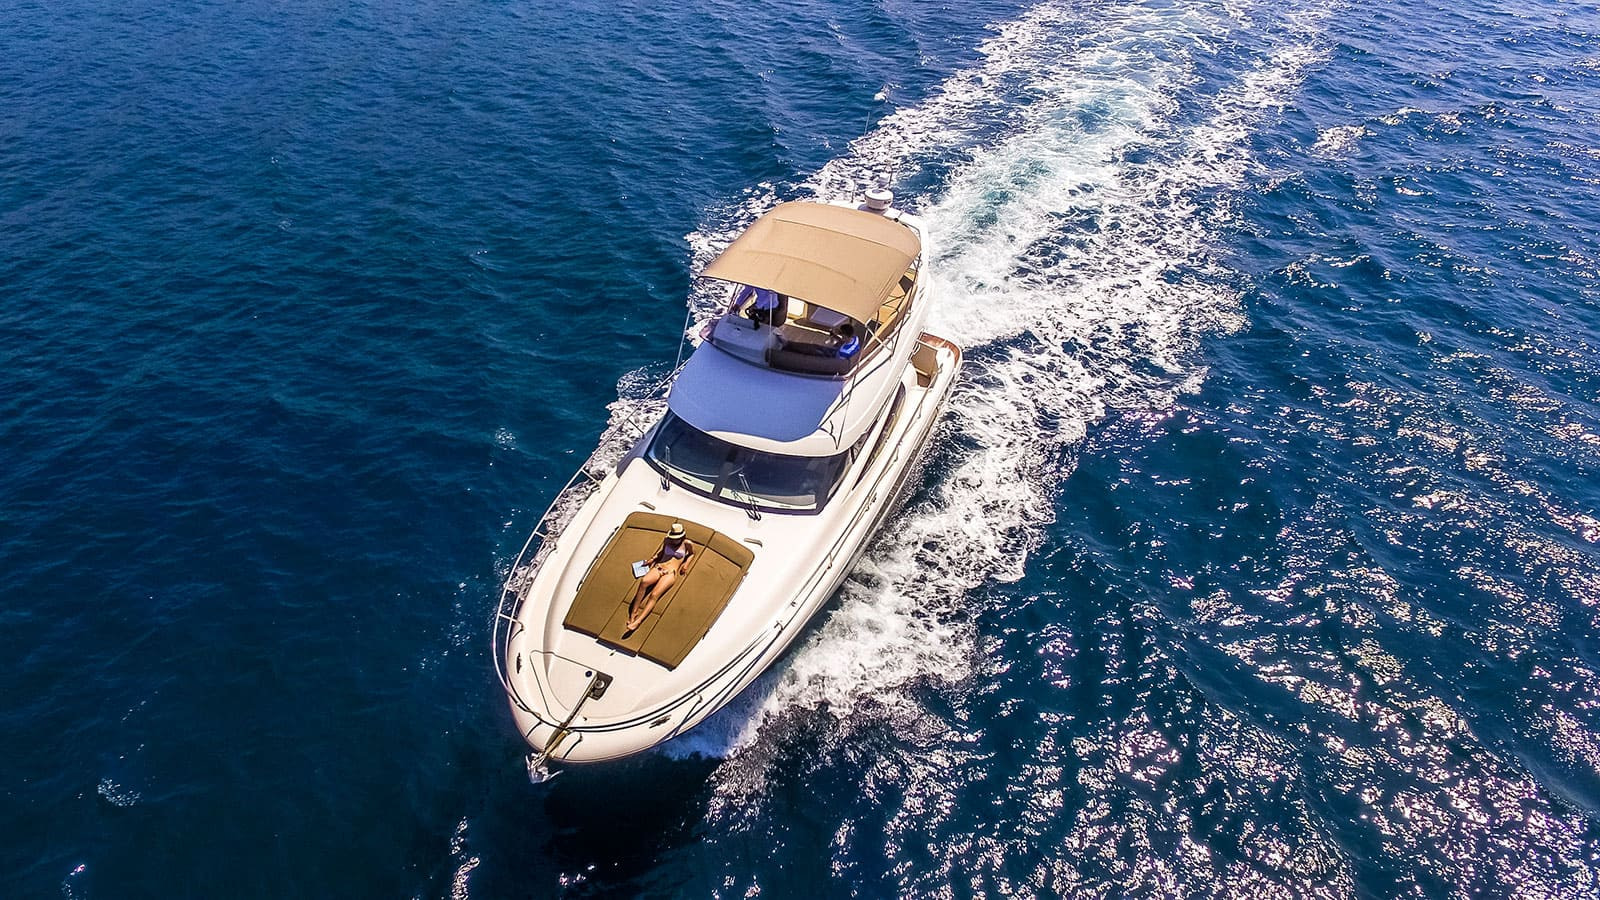 Bird’s eye view of a Prestige 440 cruising the Adriatic sea with a woman sunbathing on the sun deck